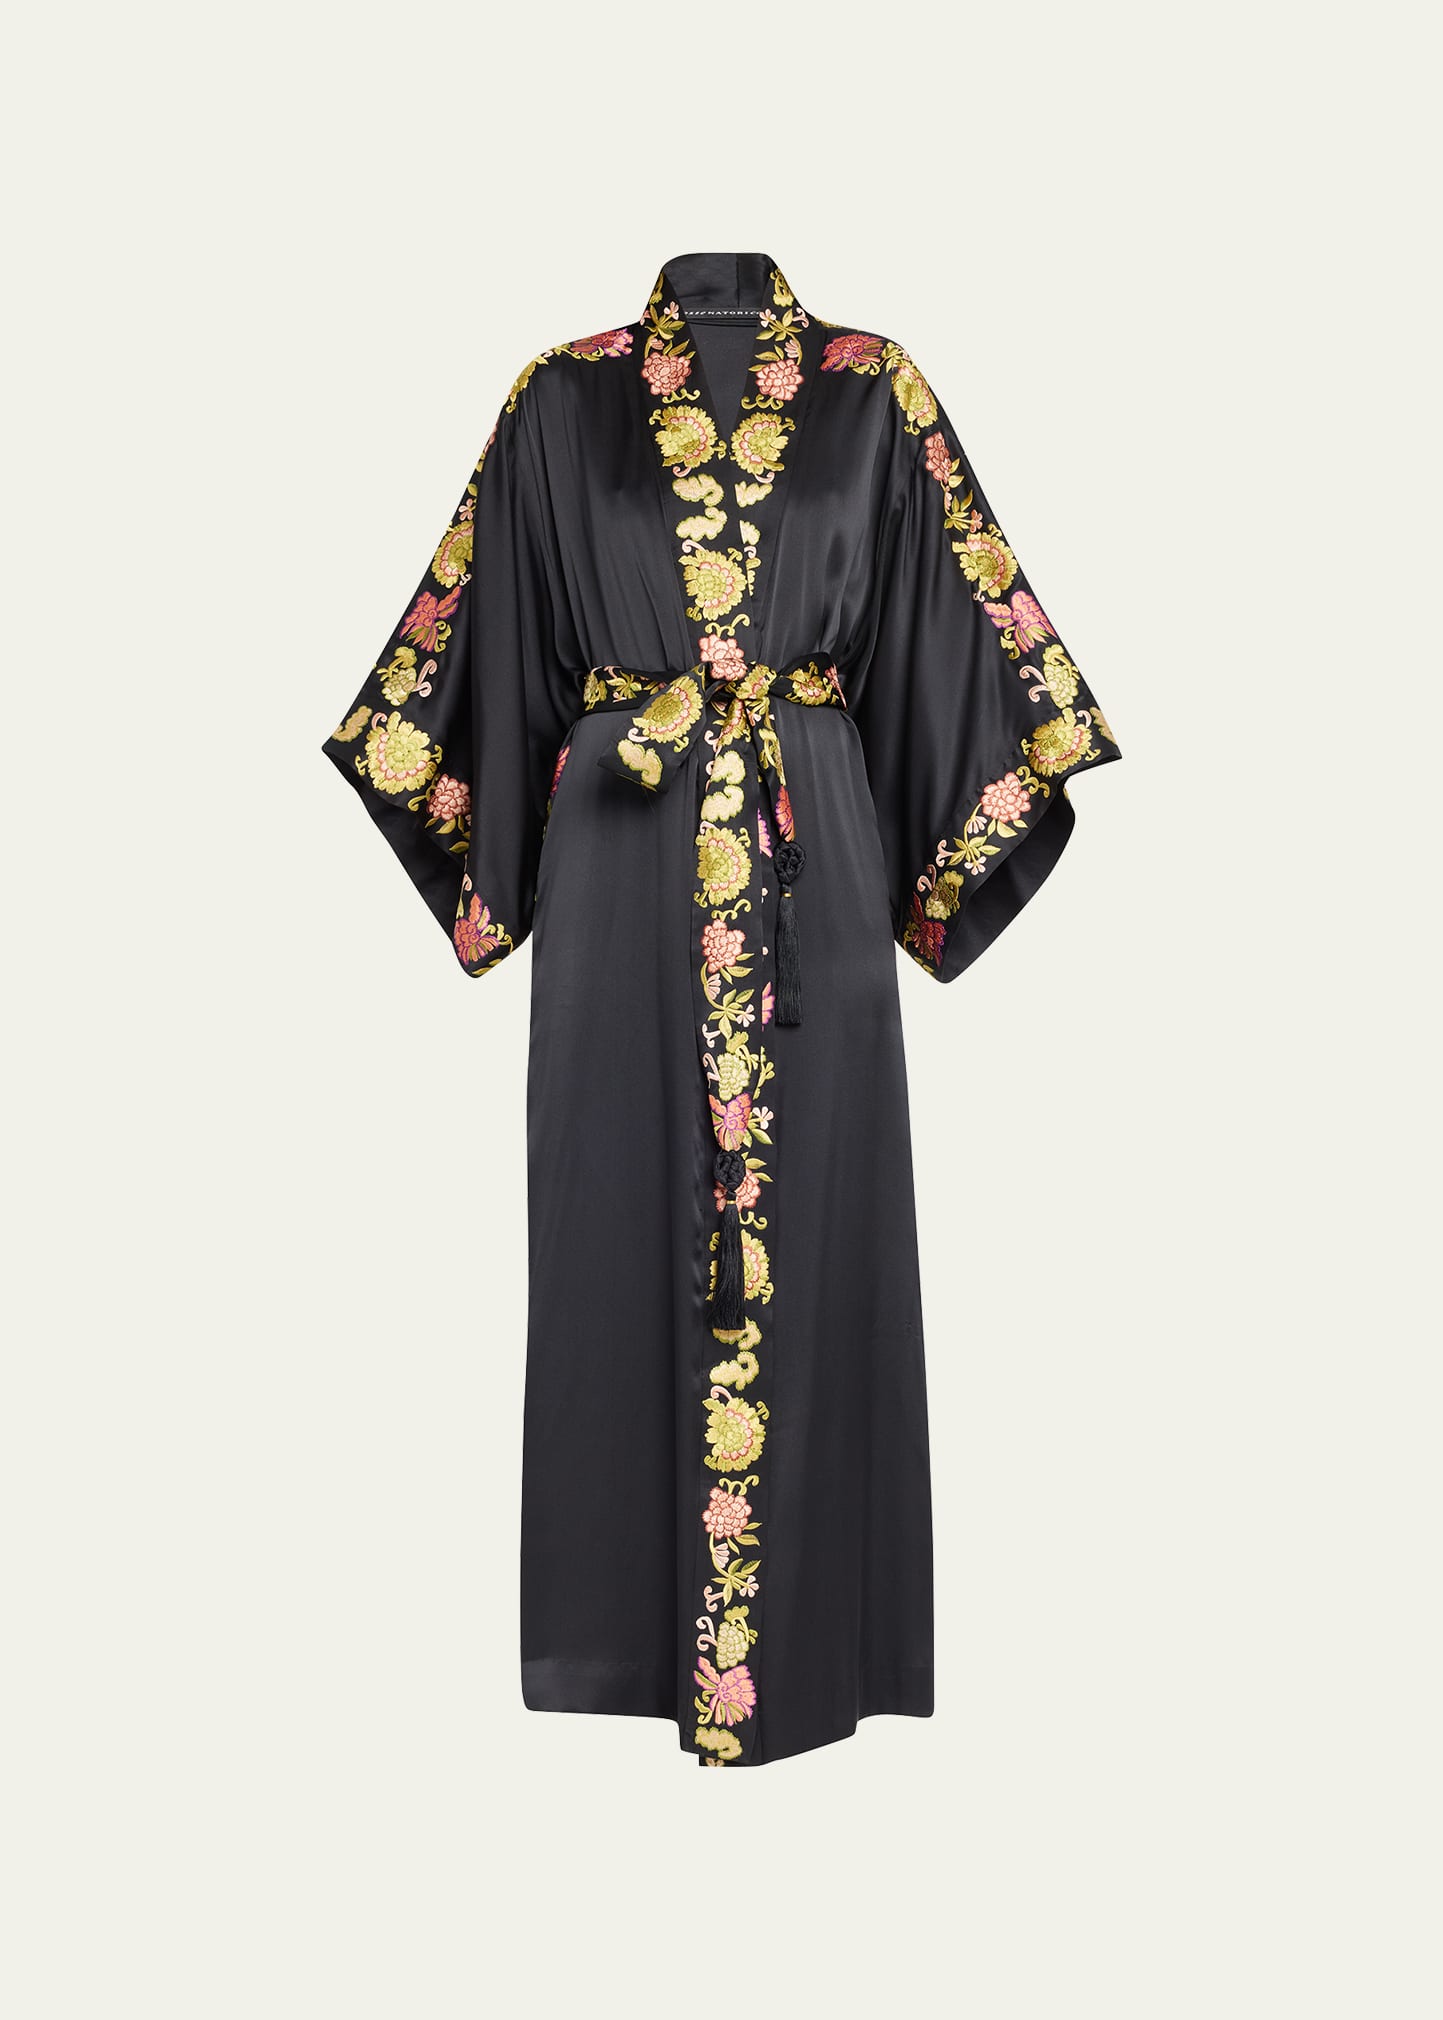 Josie Natori Yasugi Embroidered-Trim Silk Robe